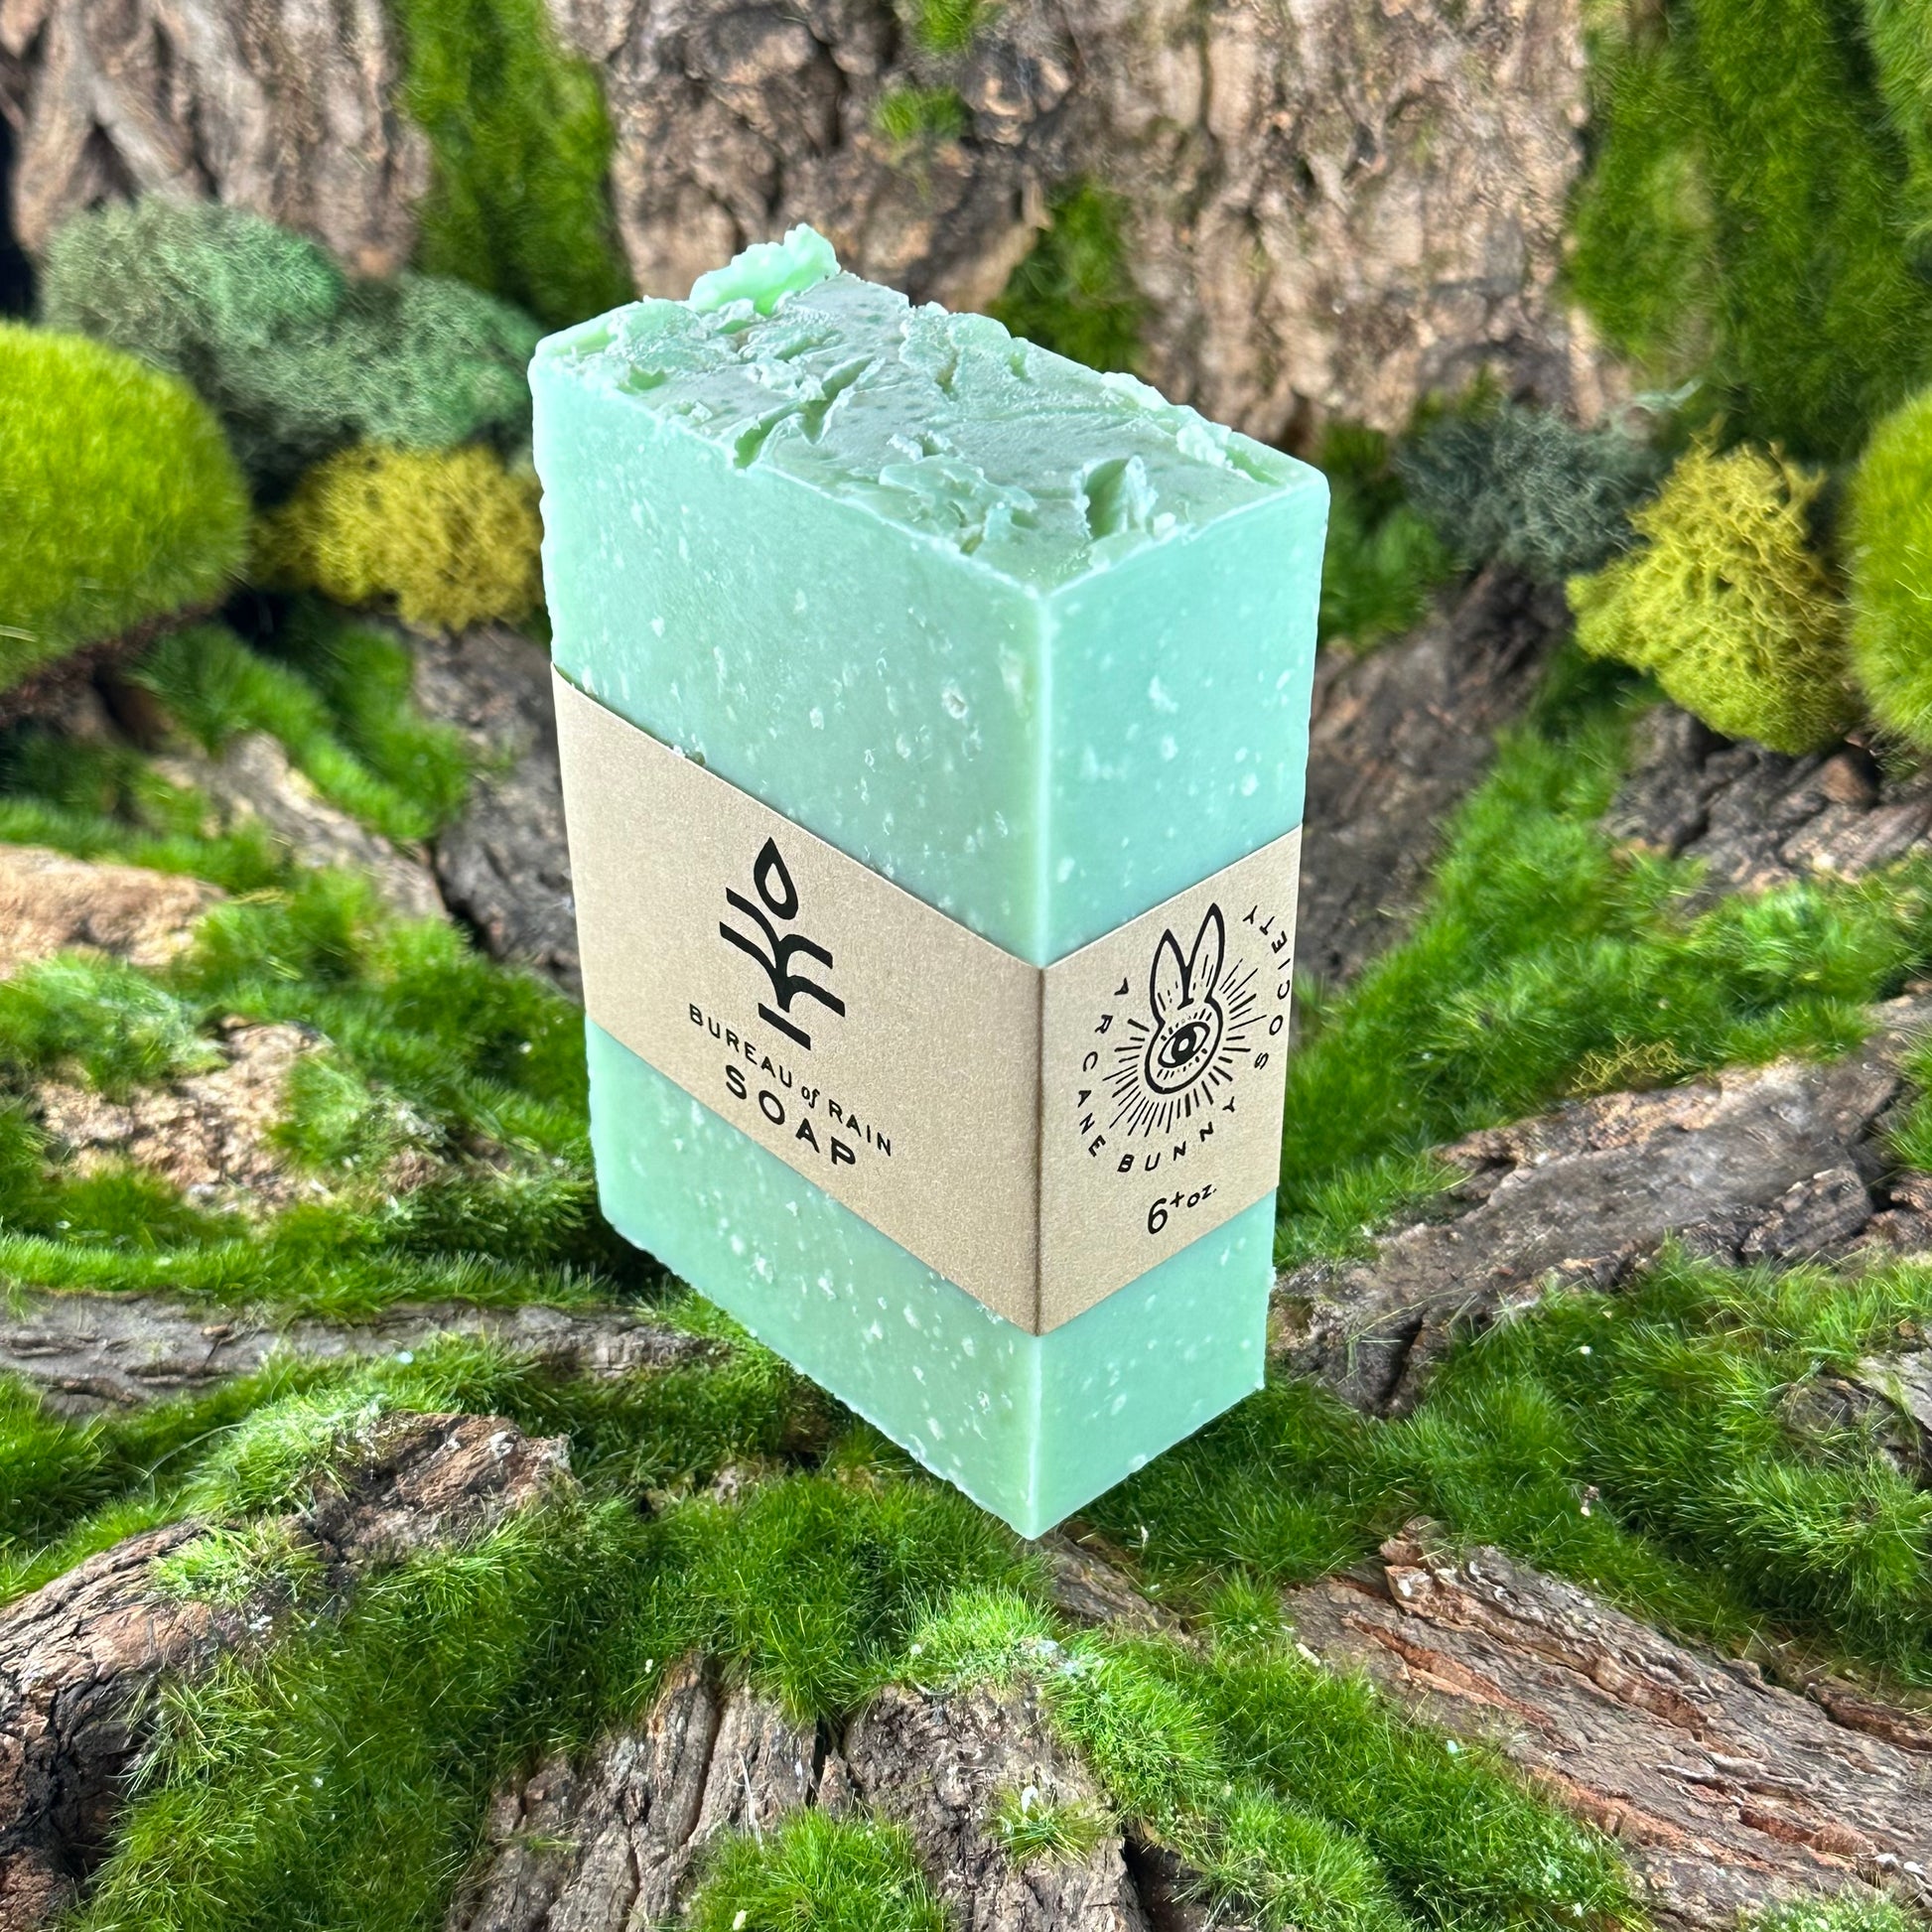 Soap Box Idea and Tutorial ~ Lake House Soapery